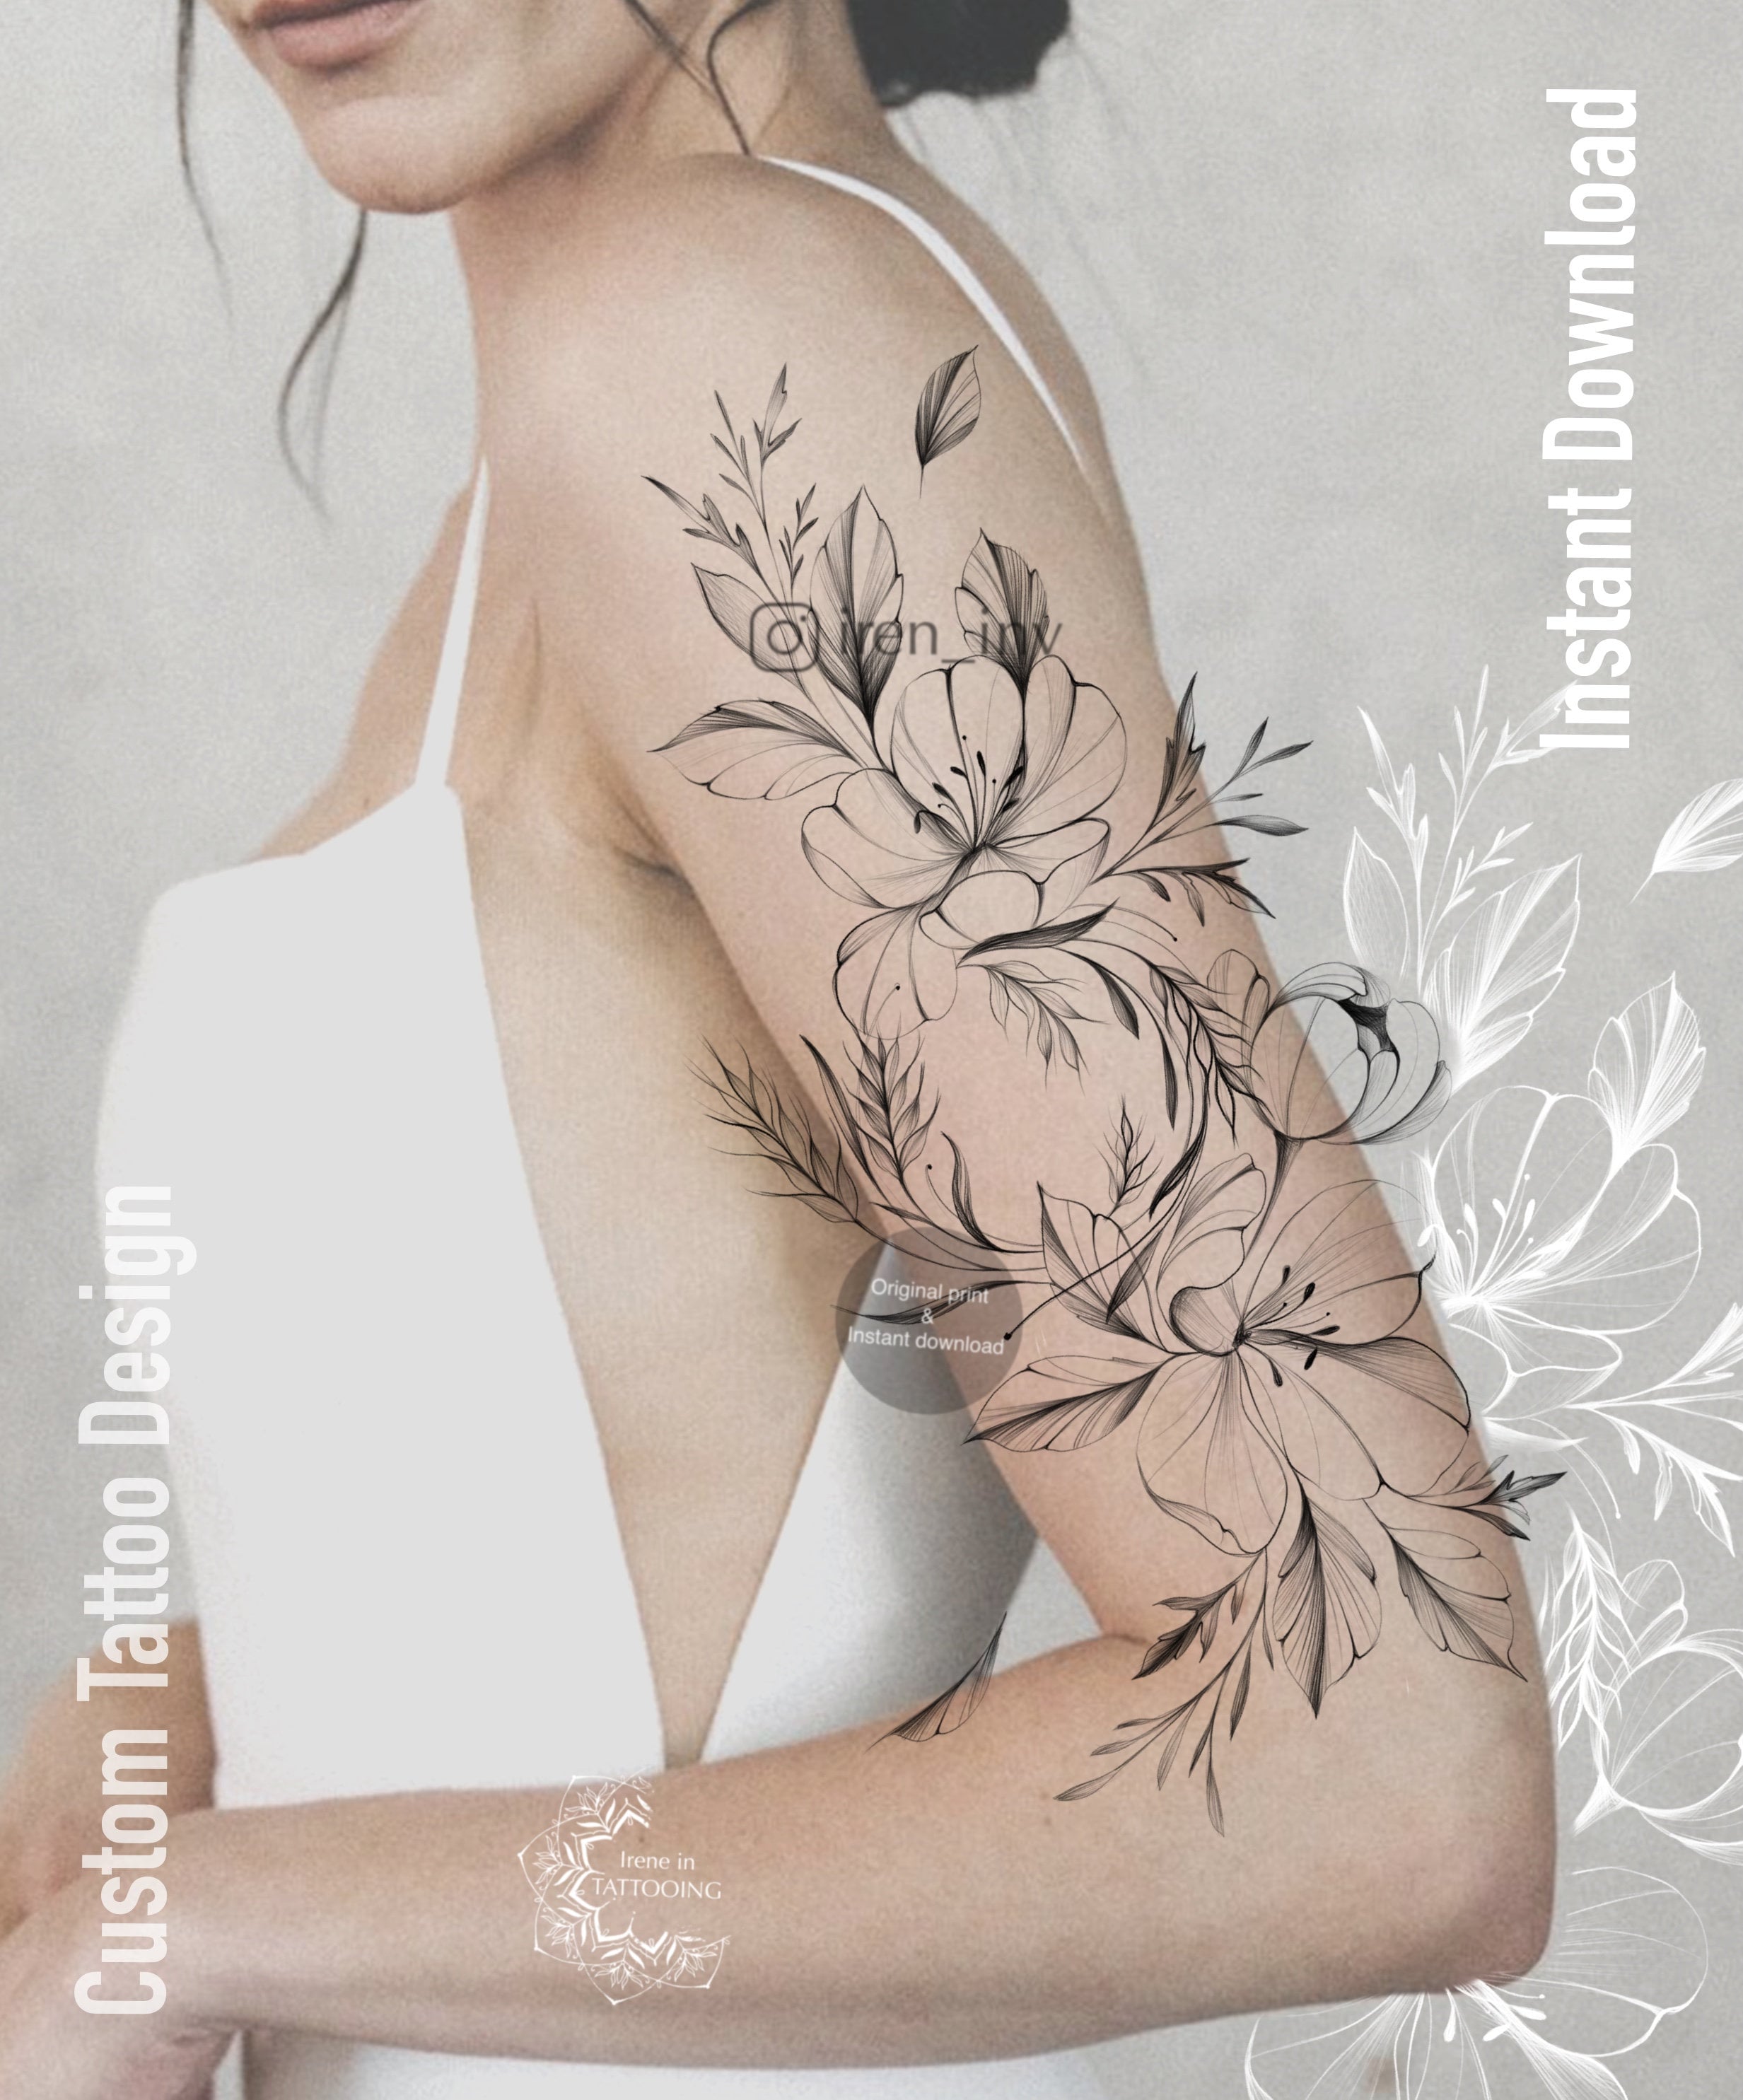 Floral shoulder cap - Done by Jason Dopko, Saskatoon, Sk. : r/tattoos